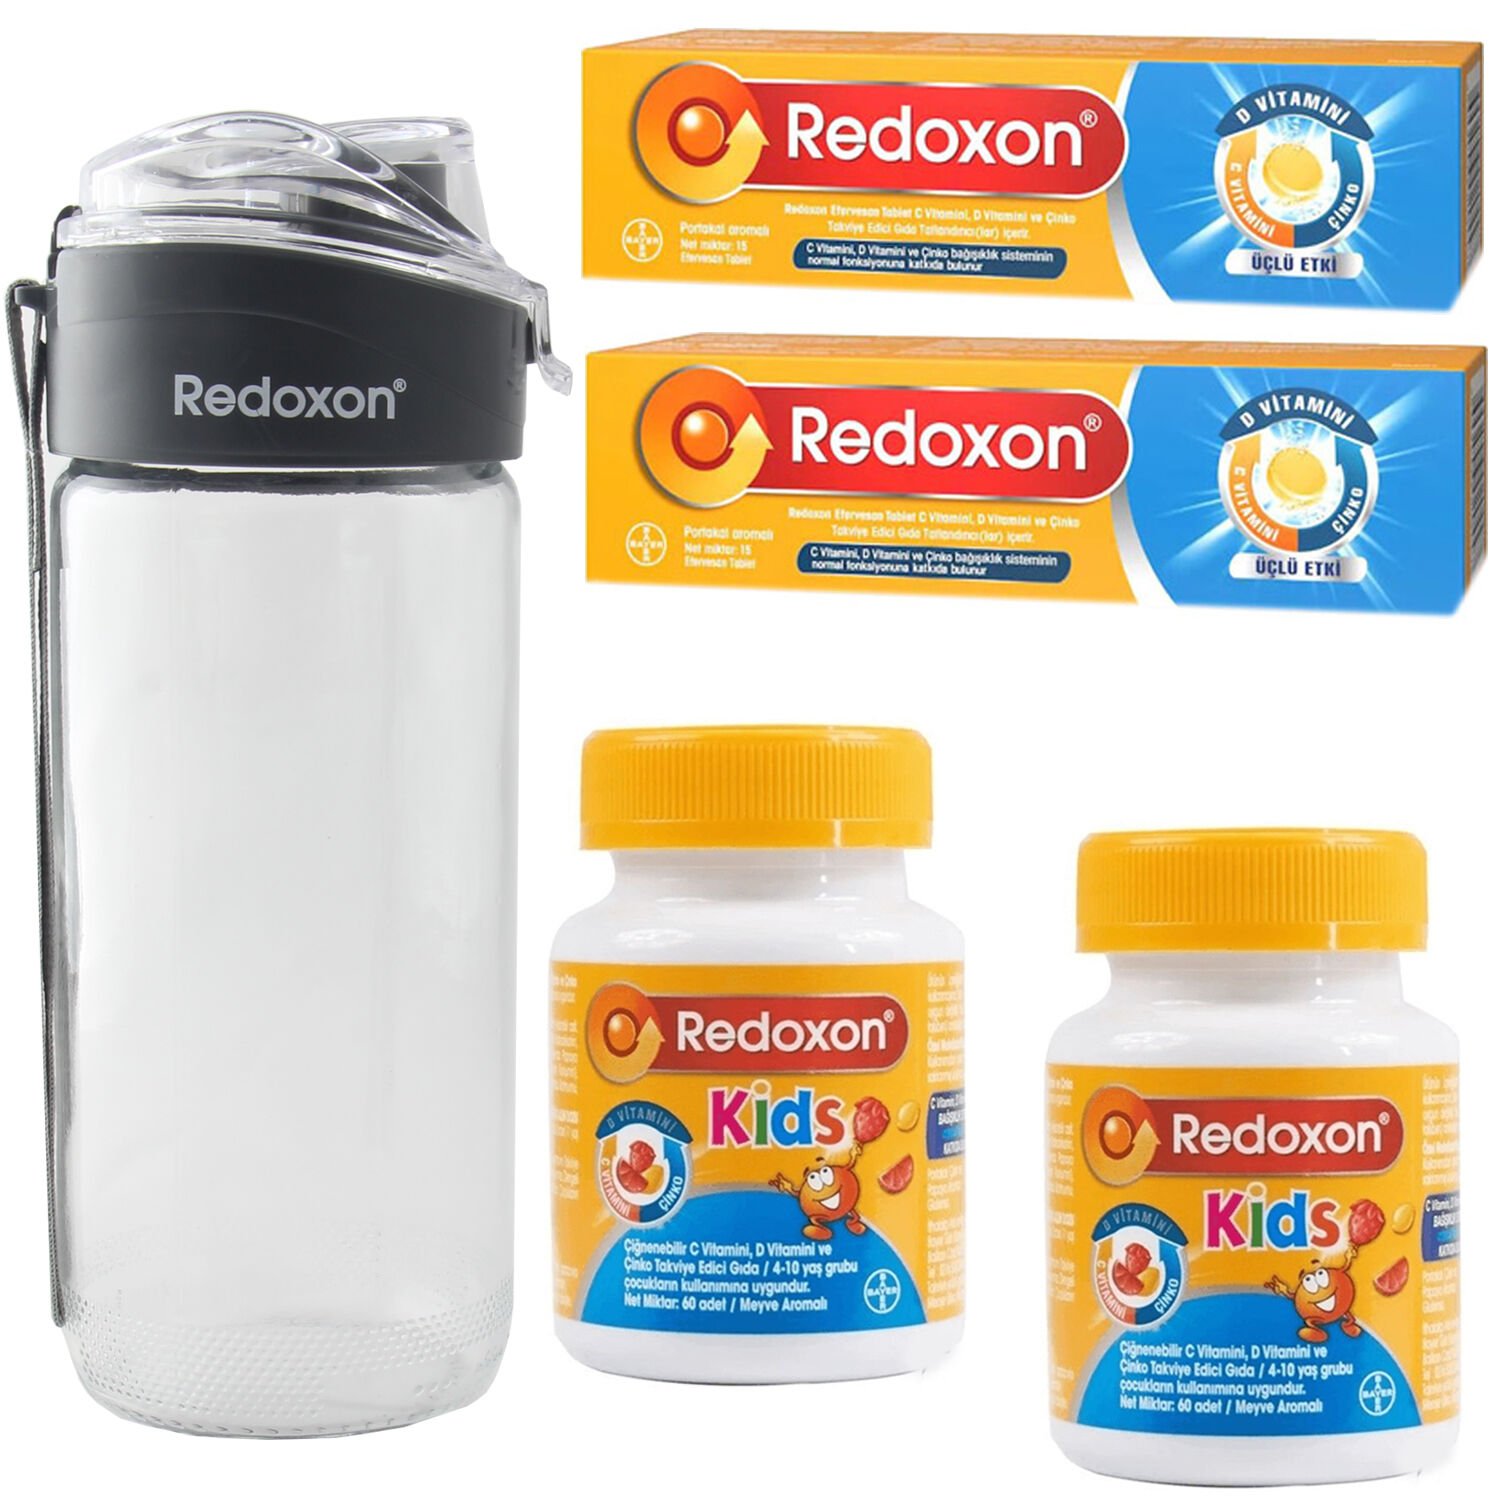 Redoxon Üçlü Etki 15 Efervesan Tablet 2 ADET + Redoxon Kids 60 Adet 2 ADET + Cam Matara HEDİYE